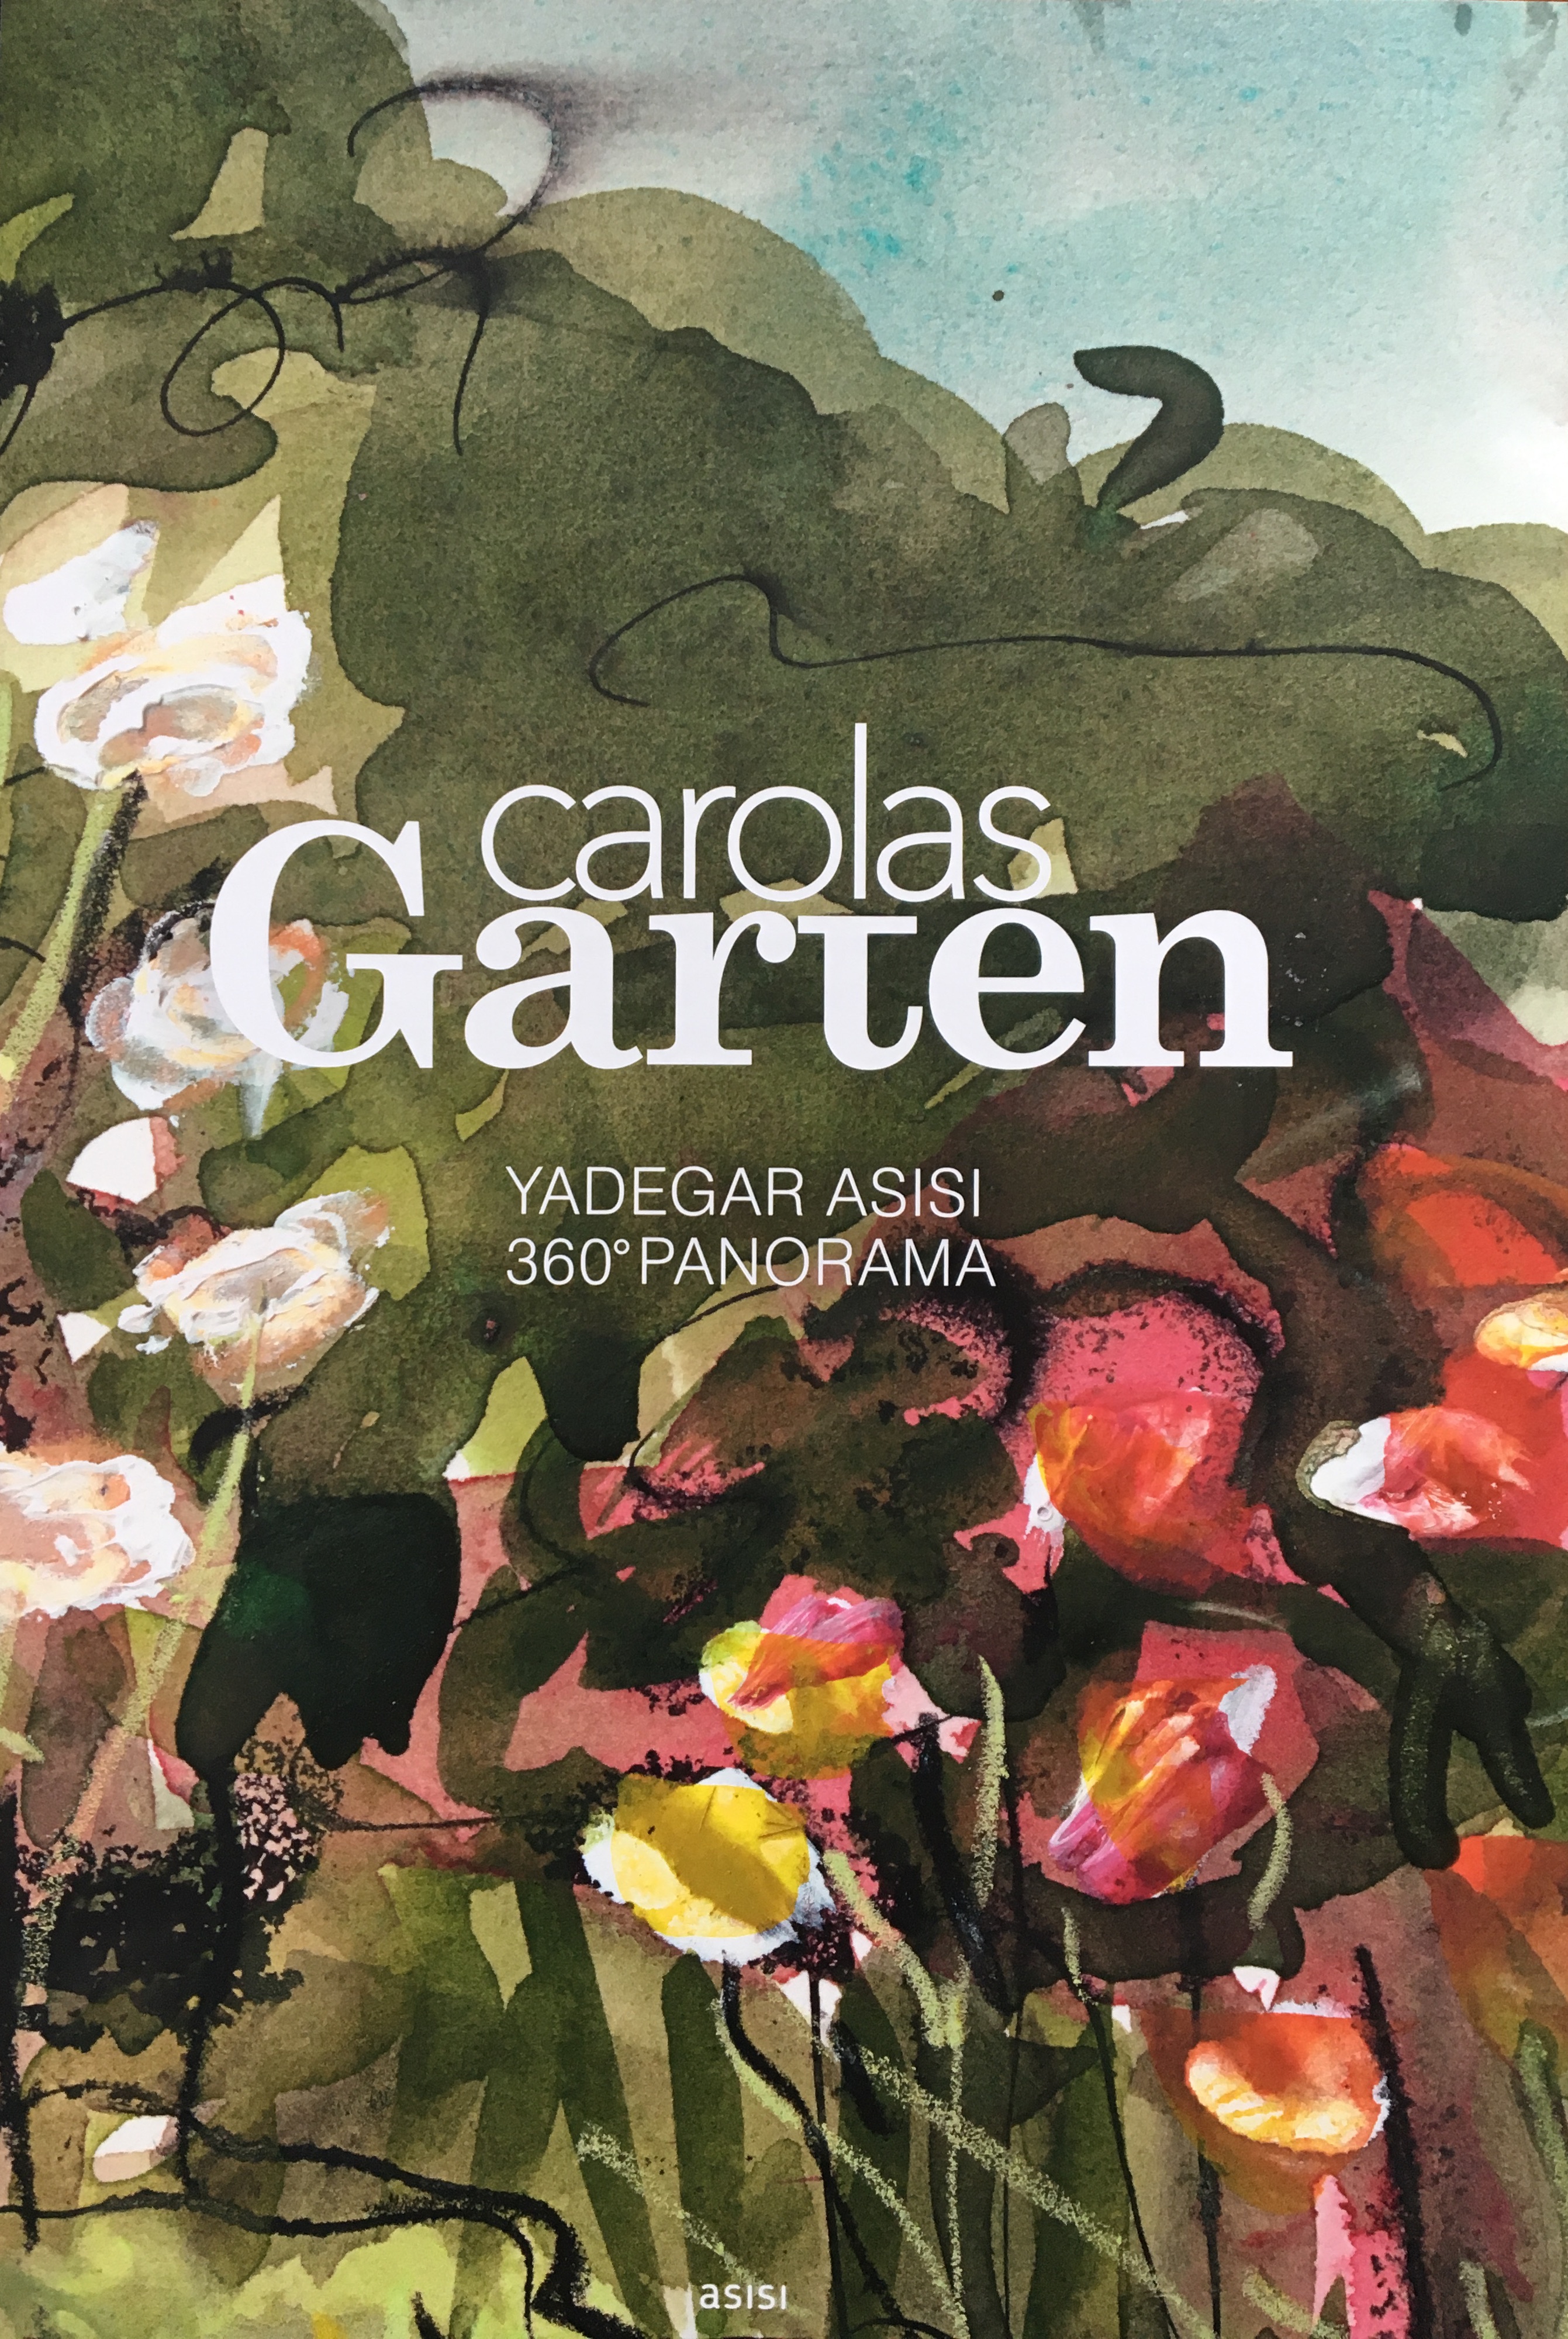 Carolas Garten, Bild: Yadegar Asisi 360° Panorama. Berlin: asisi F&E GmbH, 2019..